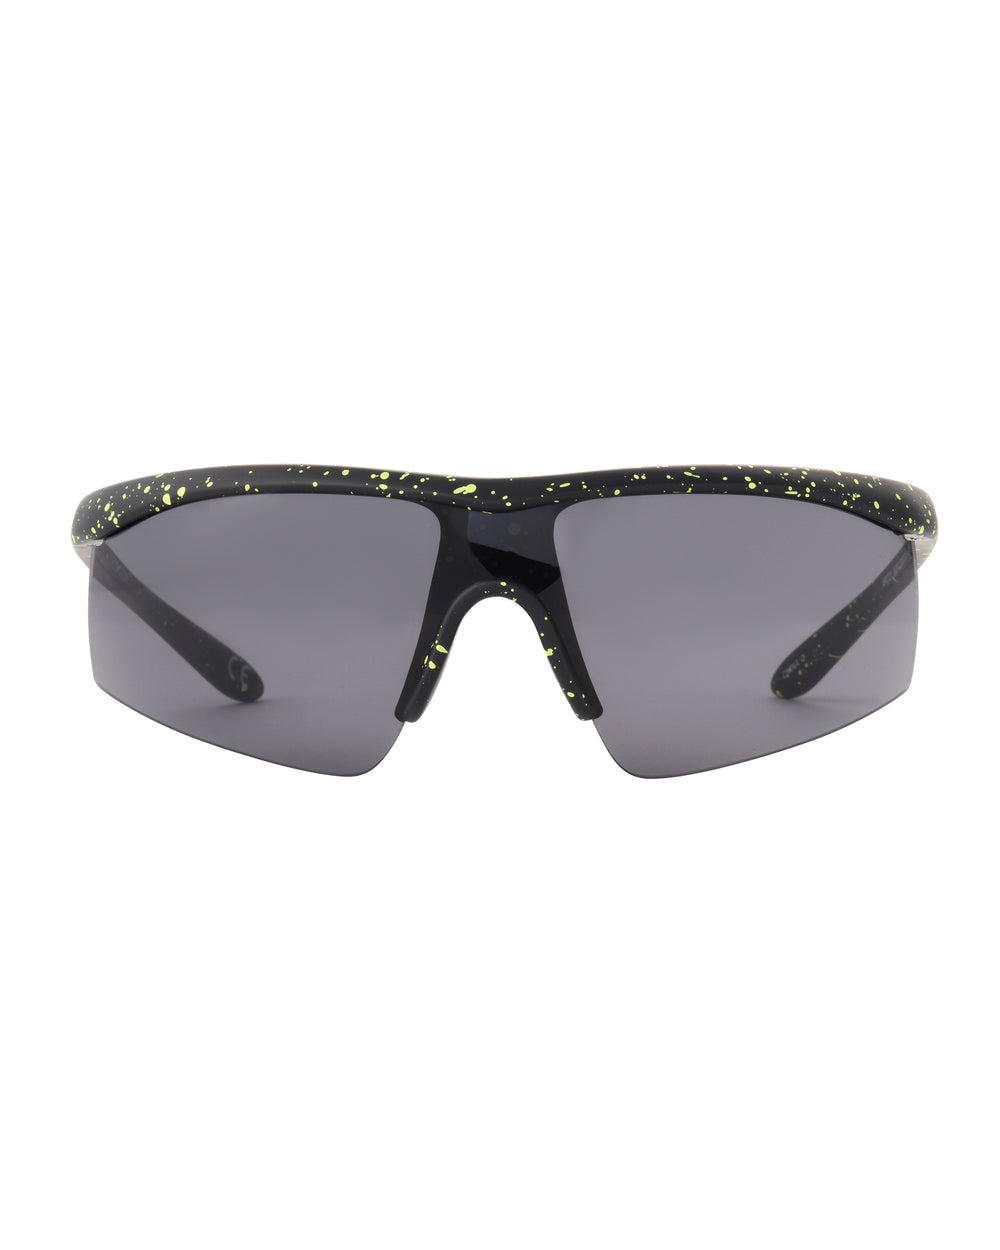 Body Glove Sunglasses mod. SR1021 BGPC 2203 Black Green Wrap Half Rim New